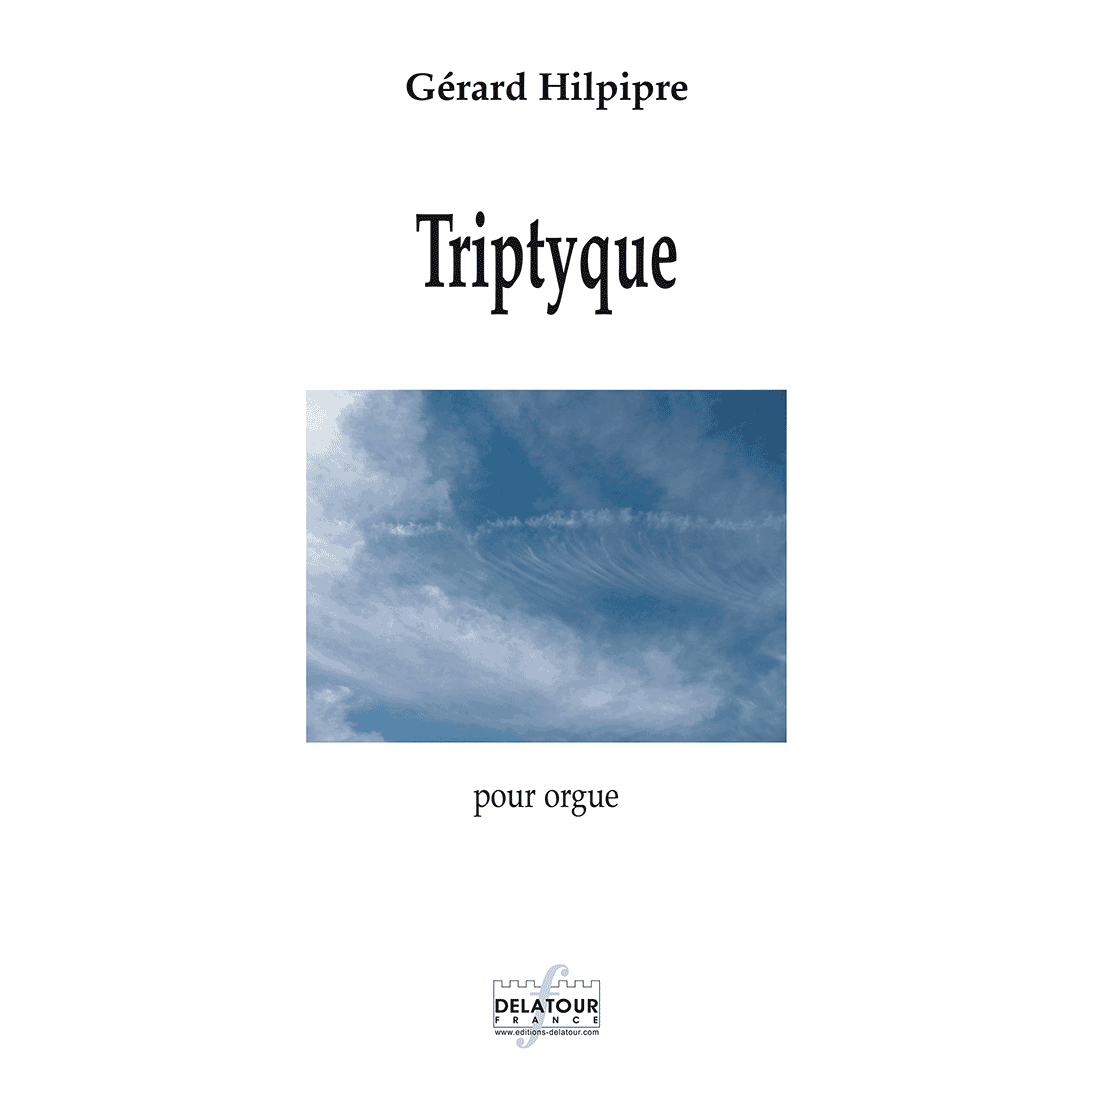 Triptyque for organ